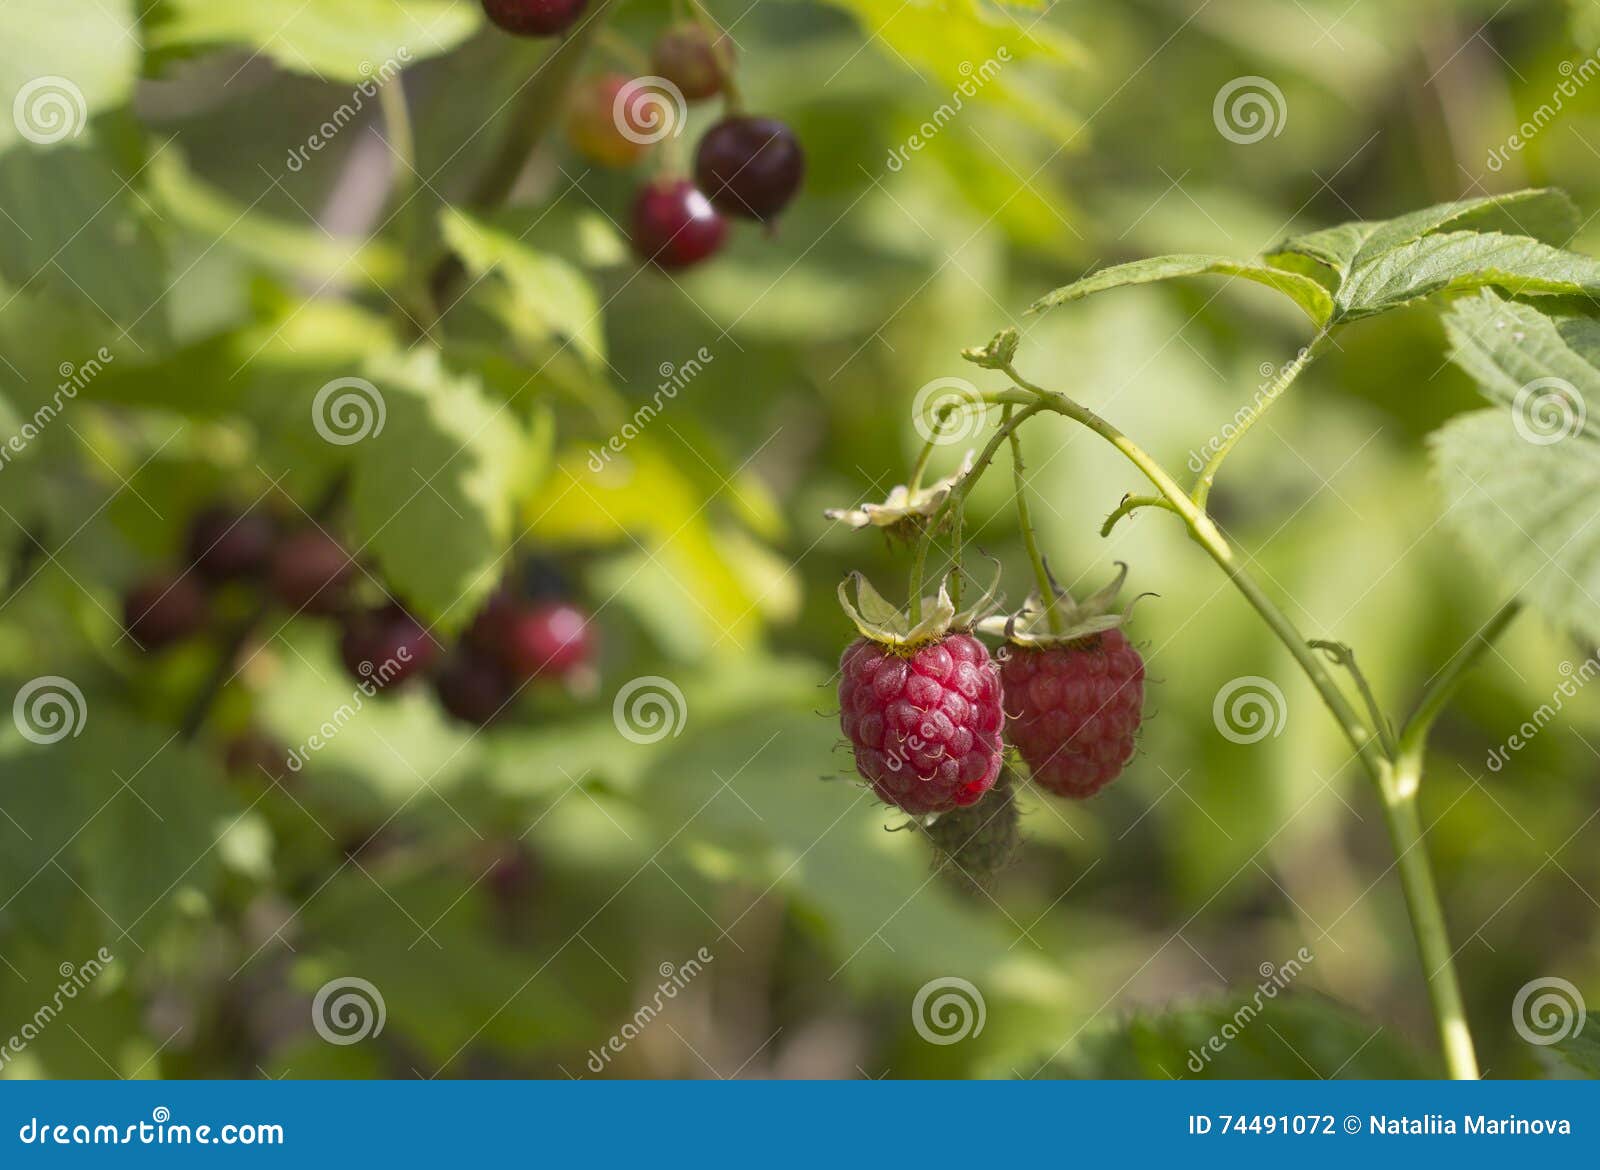 two raspberries